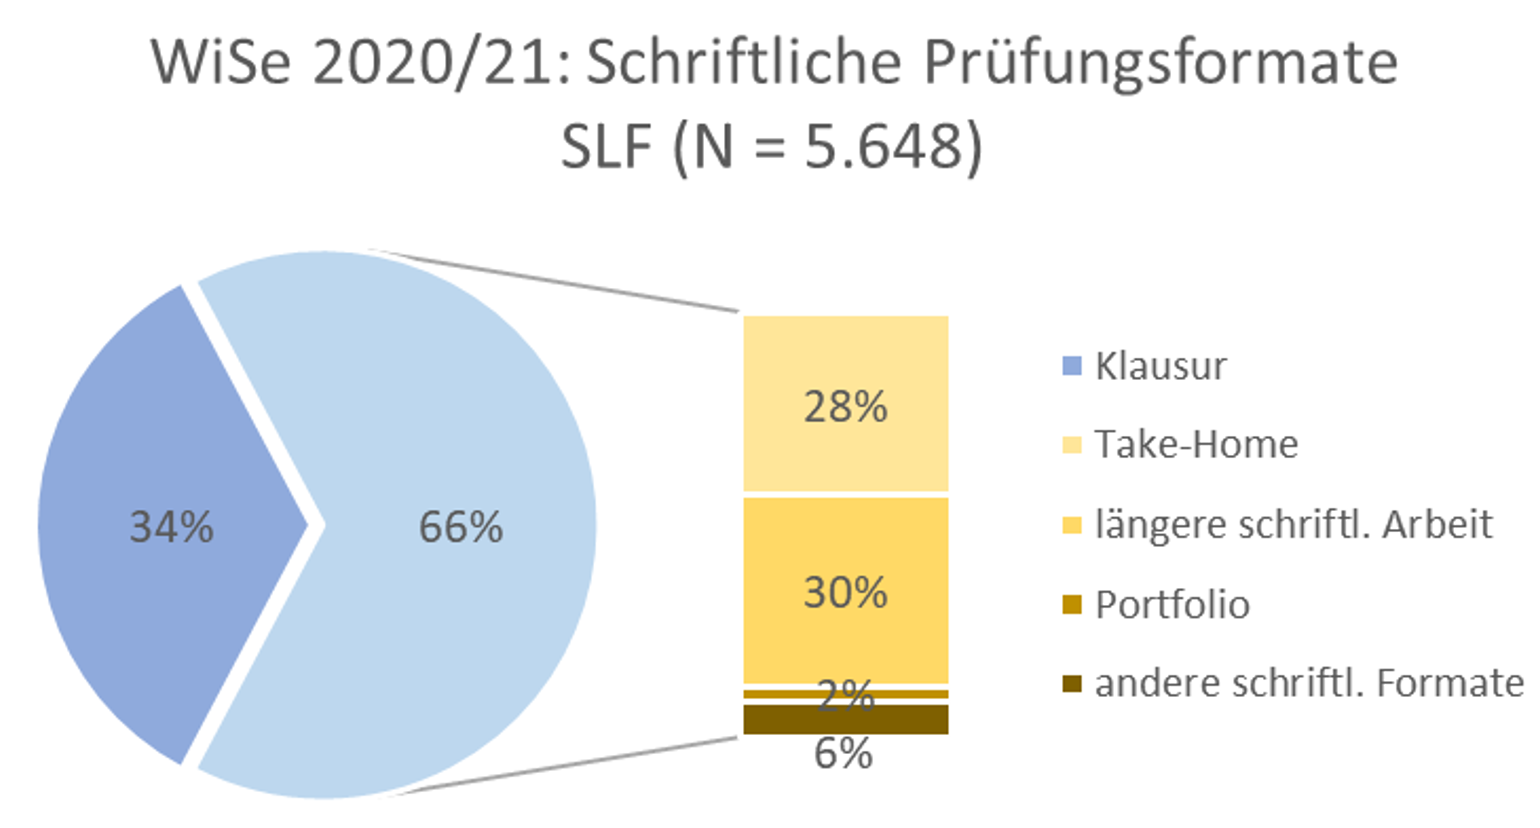 pruefungsformate_slf_ws2020-21.png